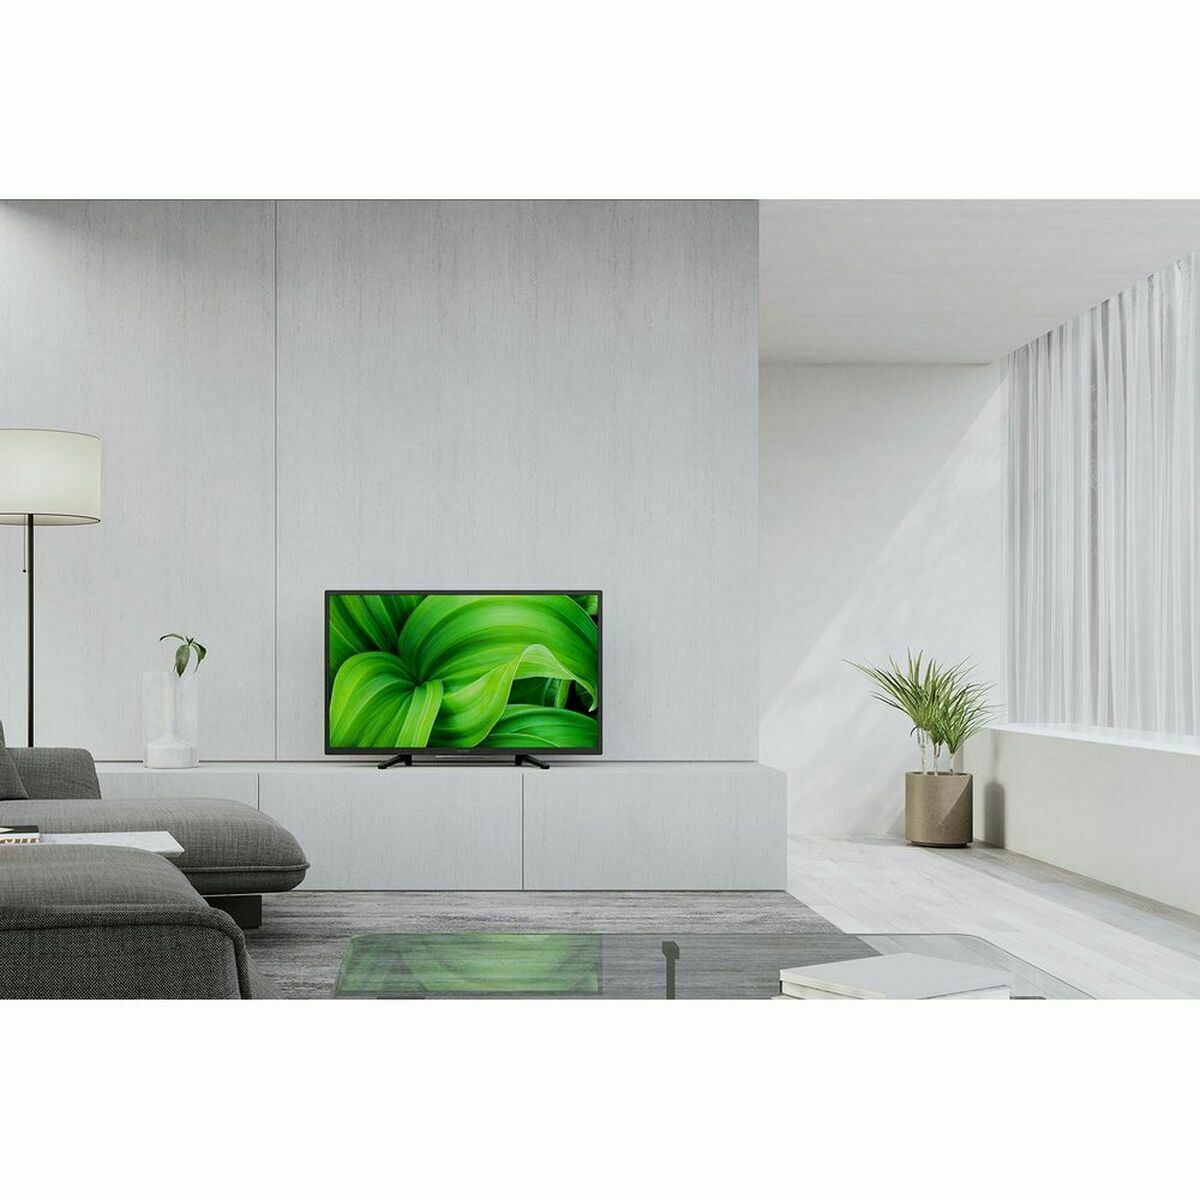 Smart TV Sony KD32W800P1AE 32 32" HD DLED WiFi 32" 80" HD LED